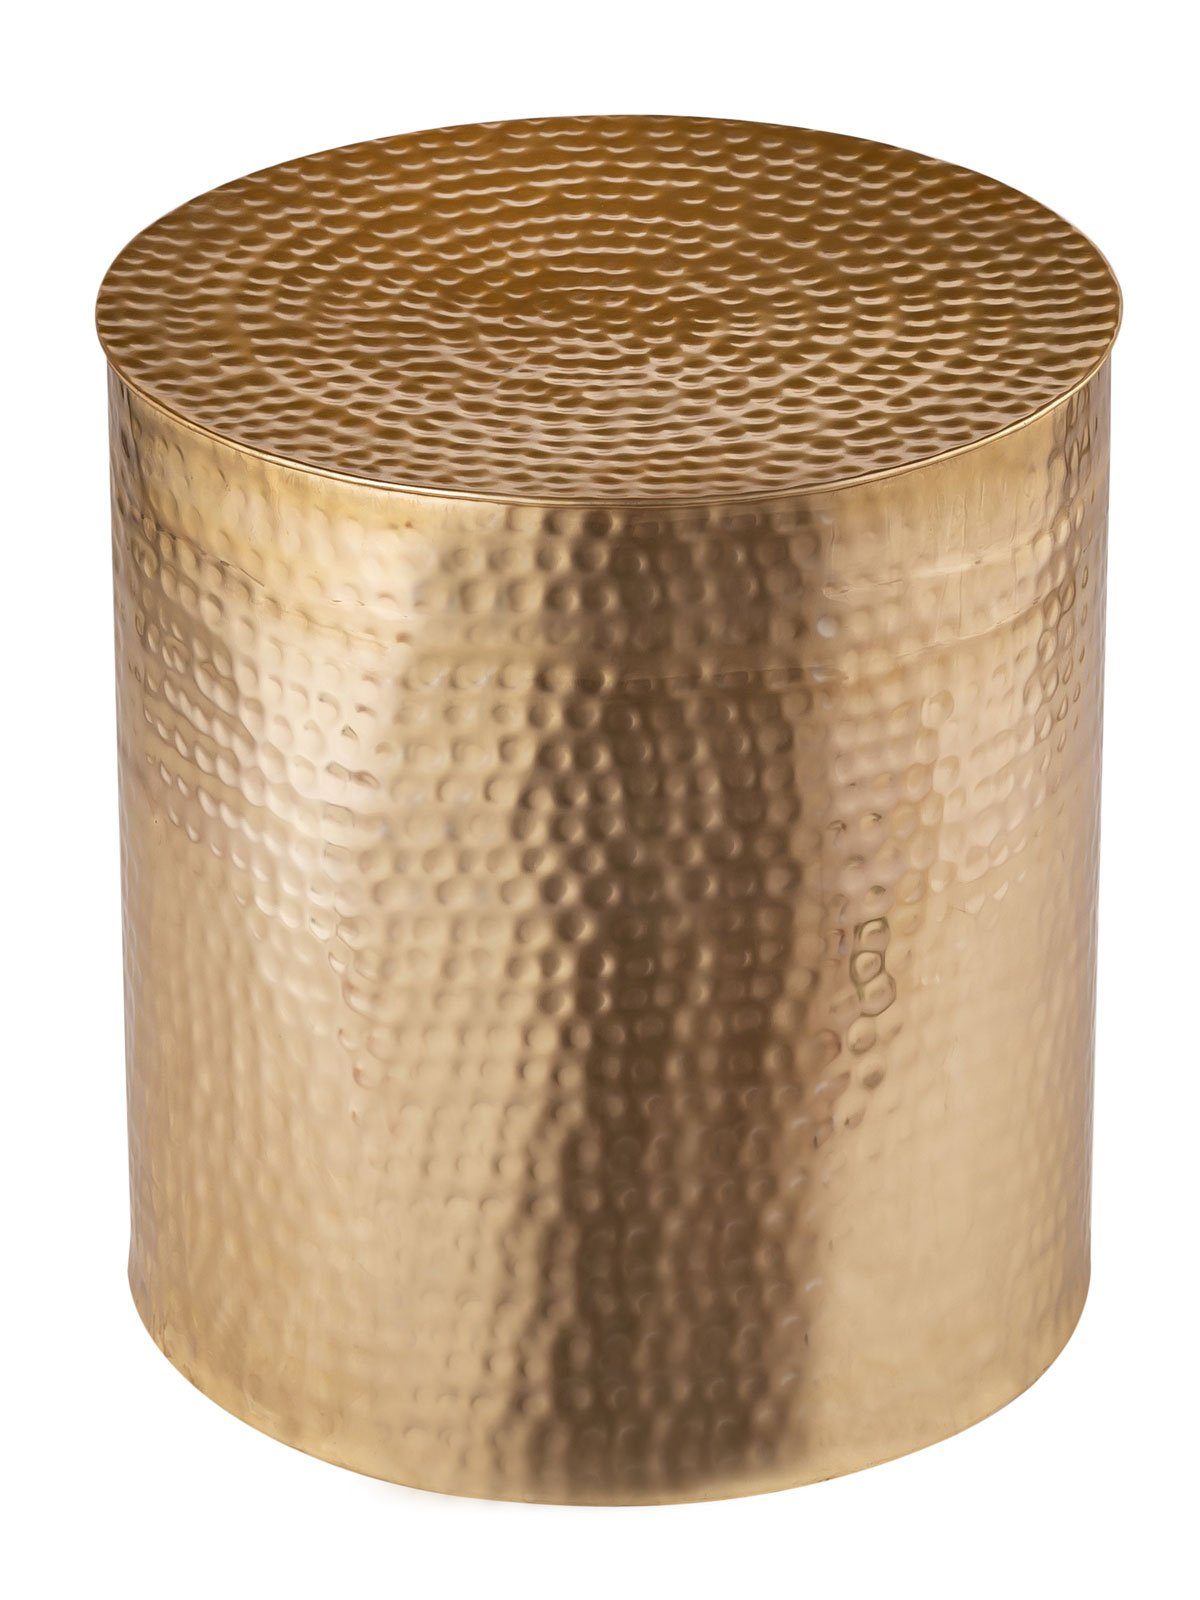 Minara Couchtisch Beistelltisch Metall Tunis silber/gold gehämmert goldfarben